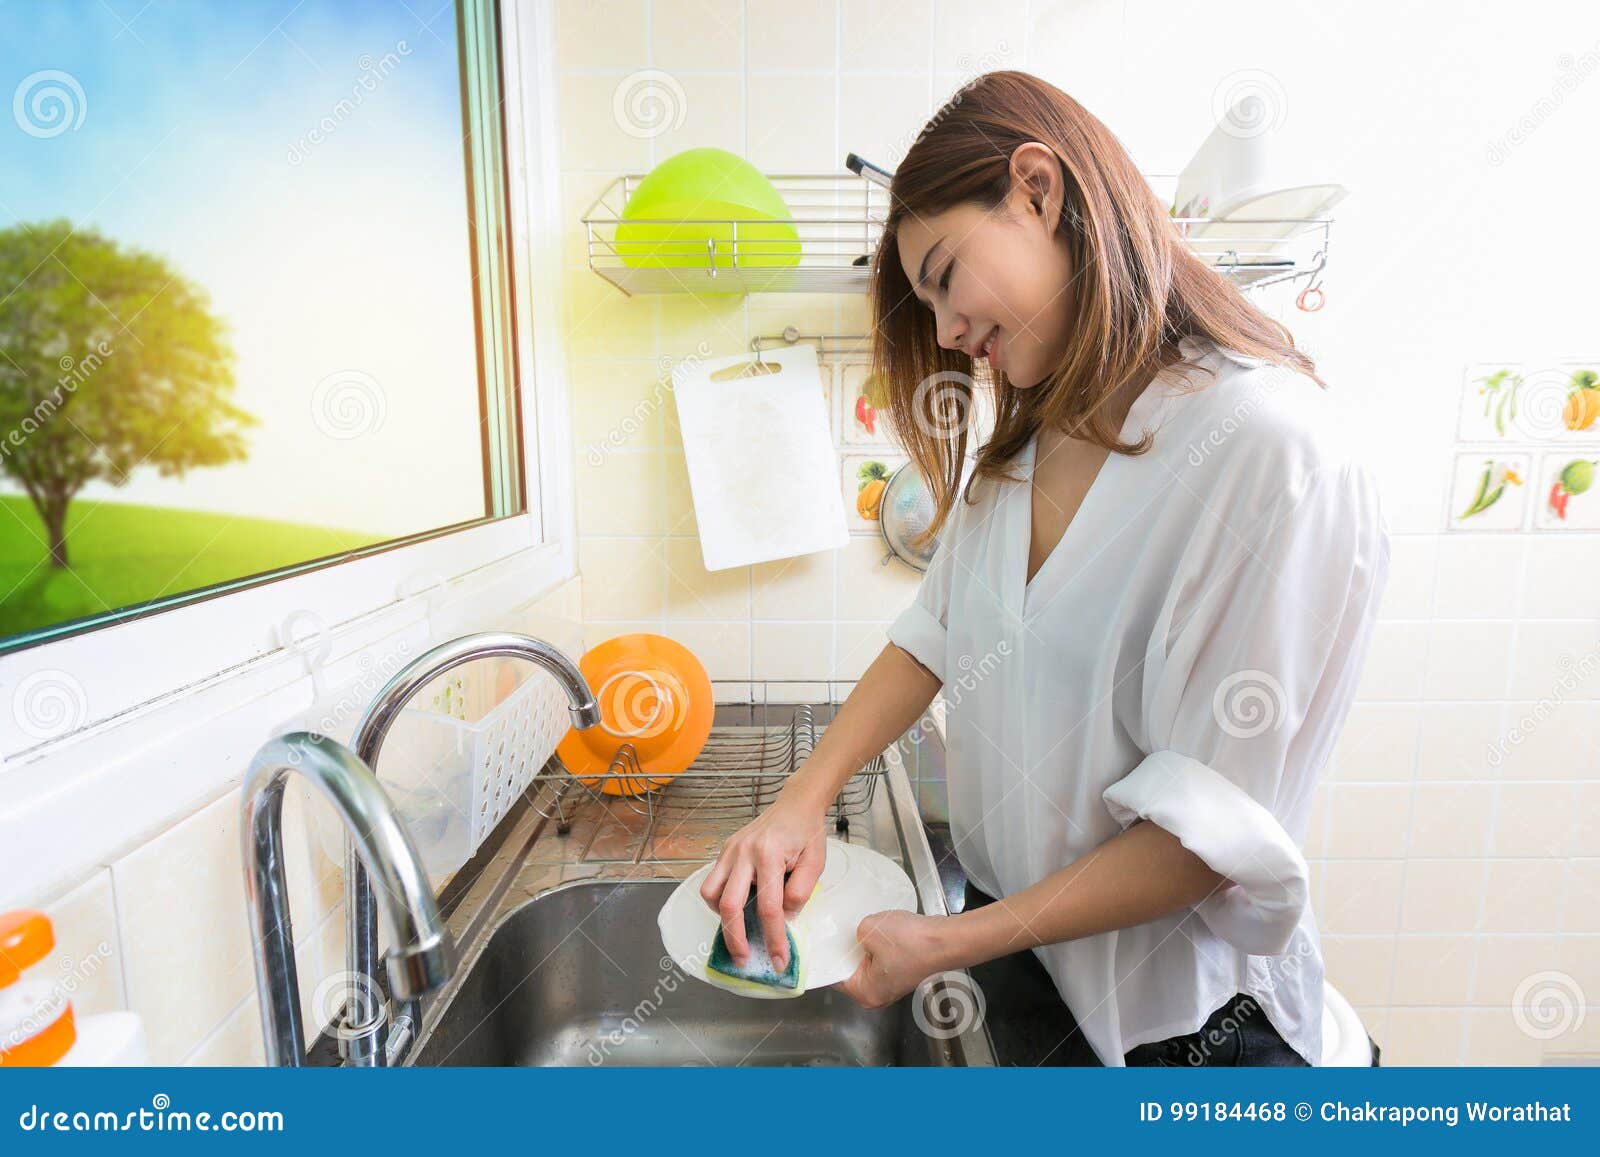 She the dishes already. Мытье посуды. Женщина моющая посуду. Женщина с тарелкой на кухне. Живопись женщина моет посуду.